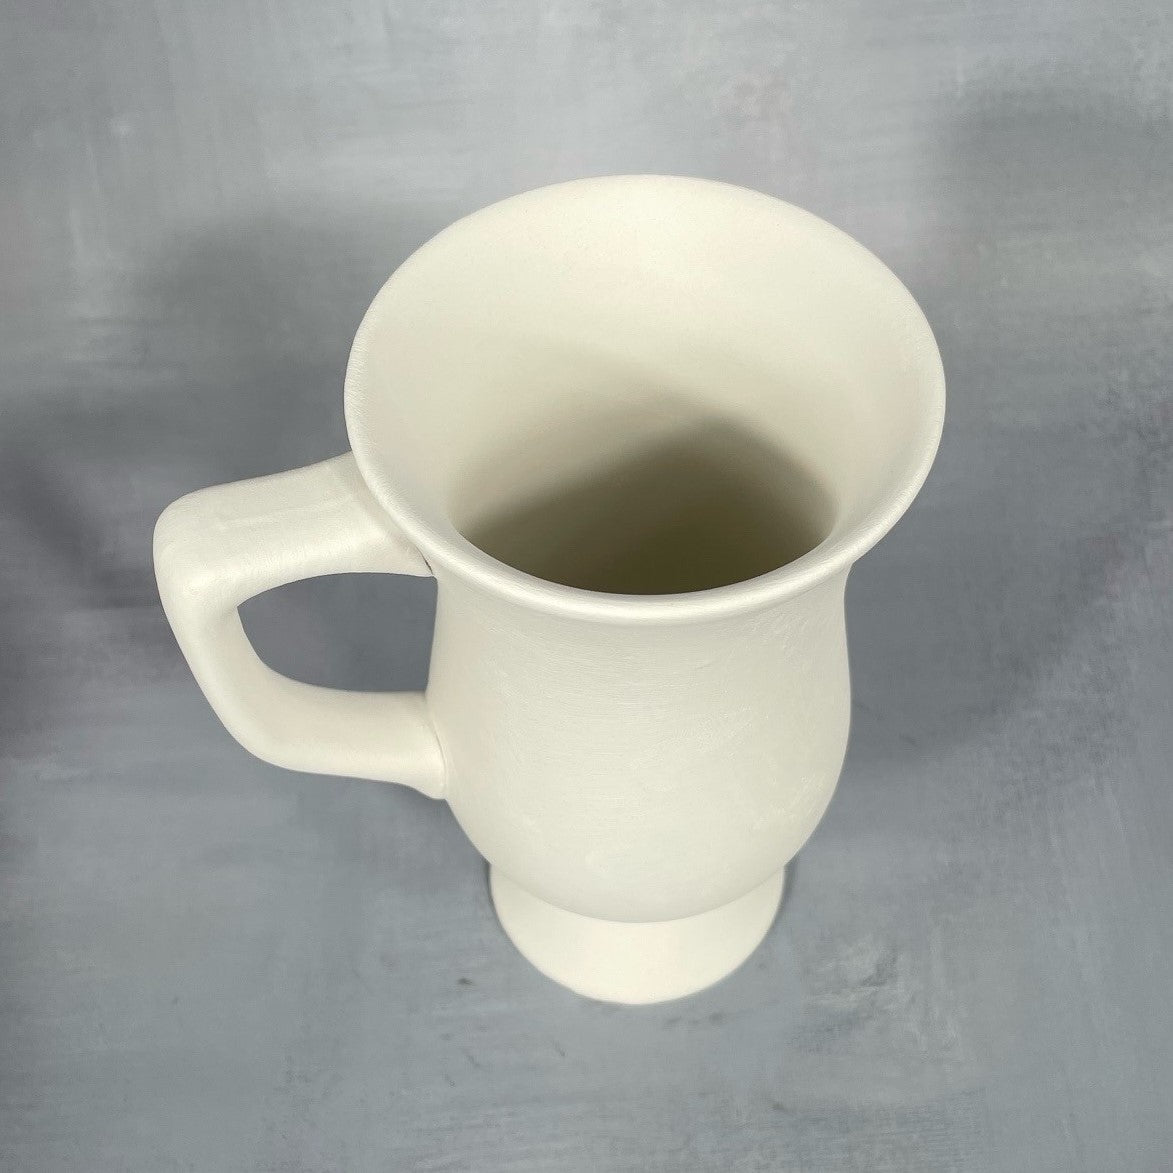 Irish Coffee Mug